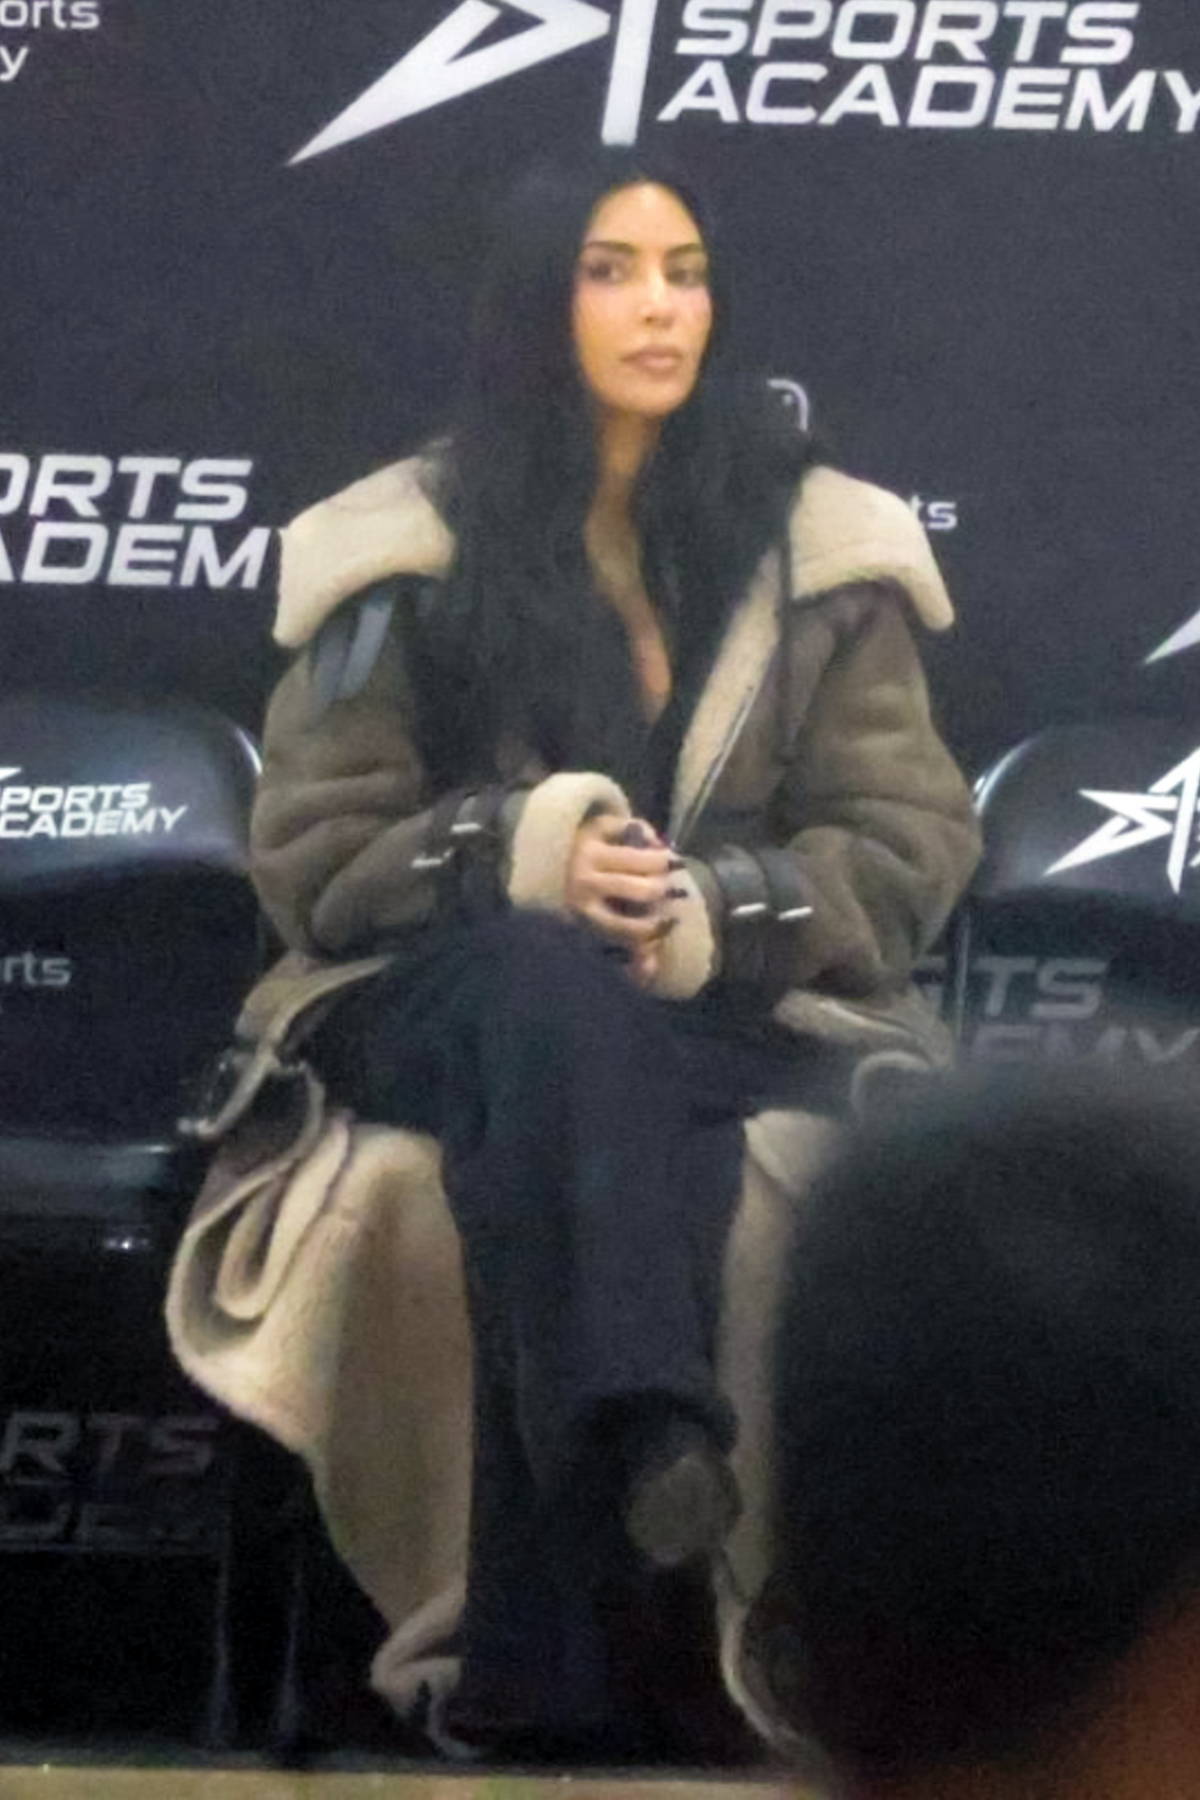 Black Long Kim Kardashian Son Saint's Soccer Game Coat - Jacket Hub